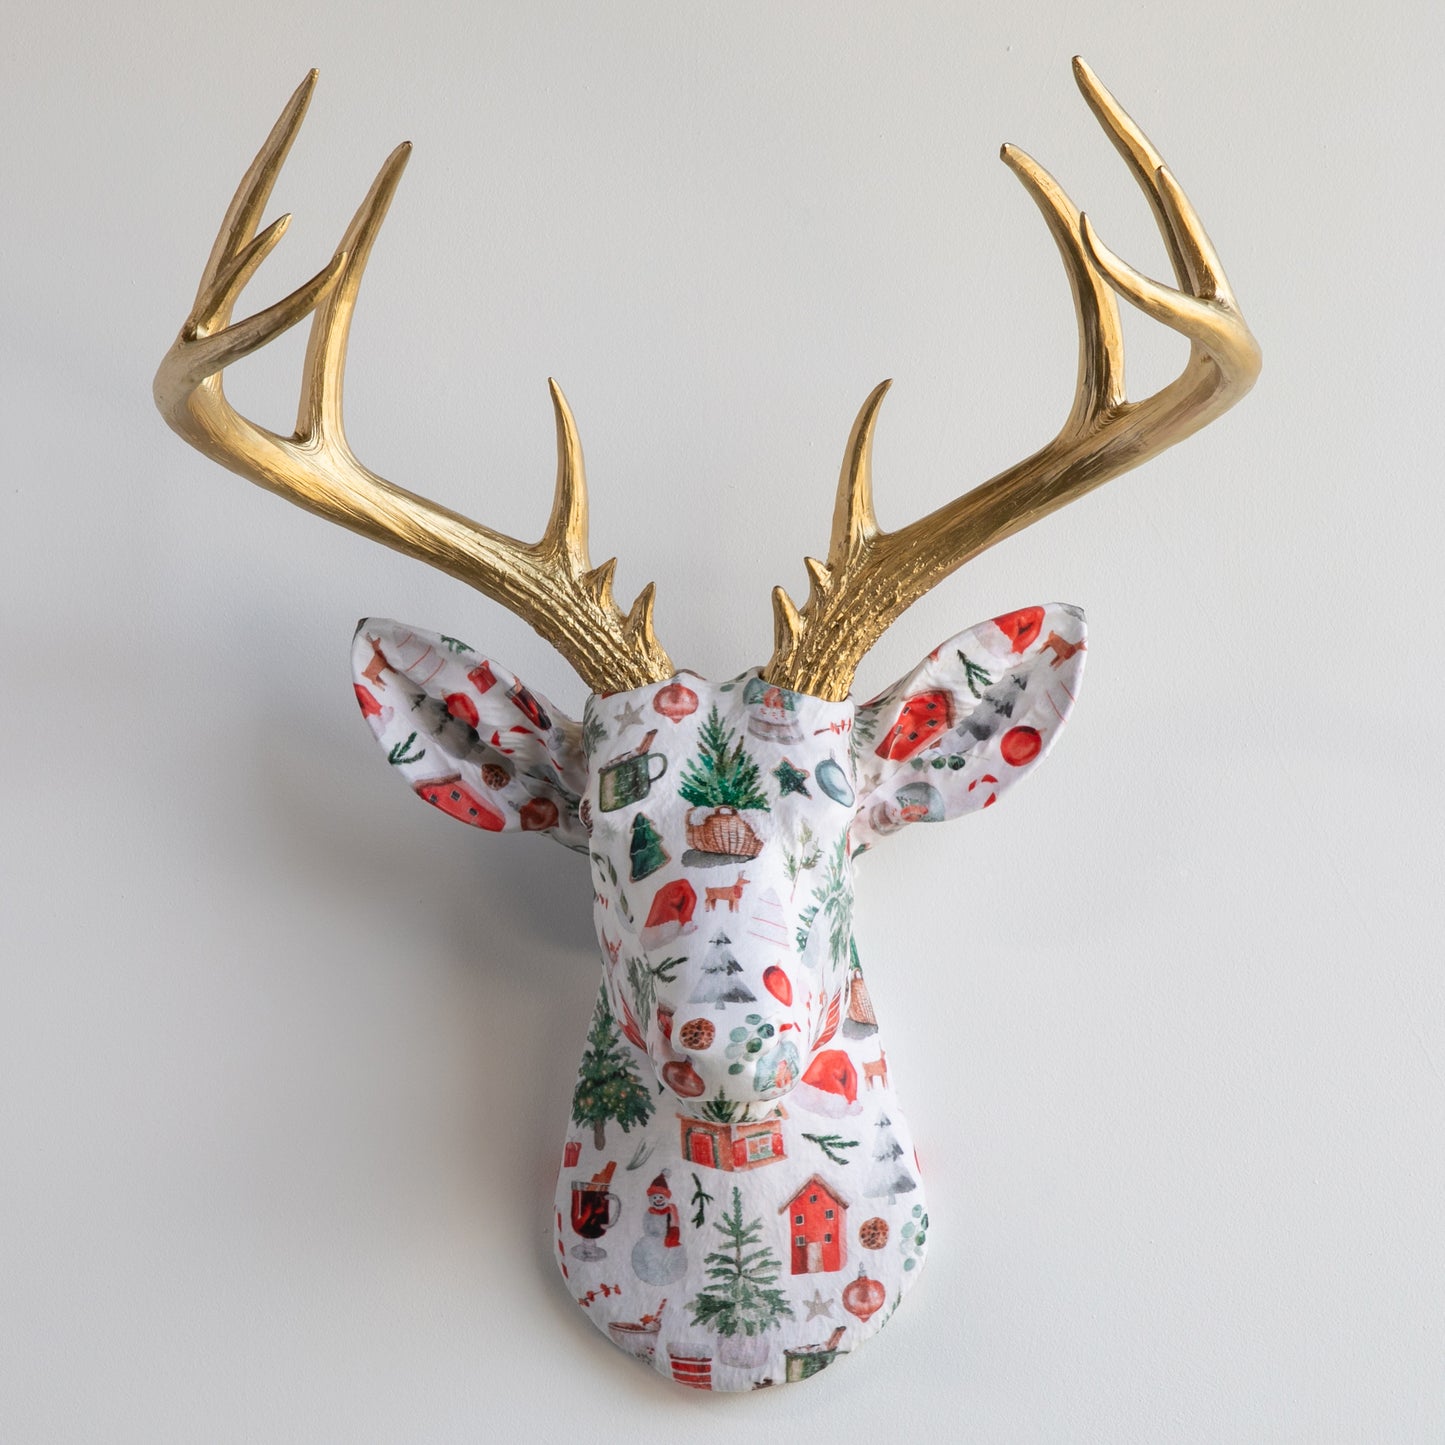 Fabric Deer Head - Cozy Christmas Fabric Deer Head